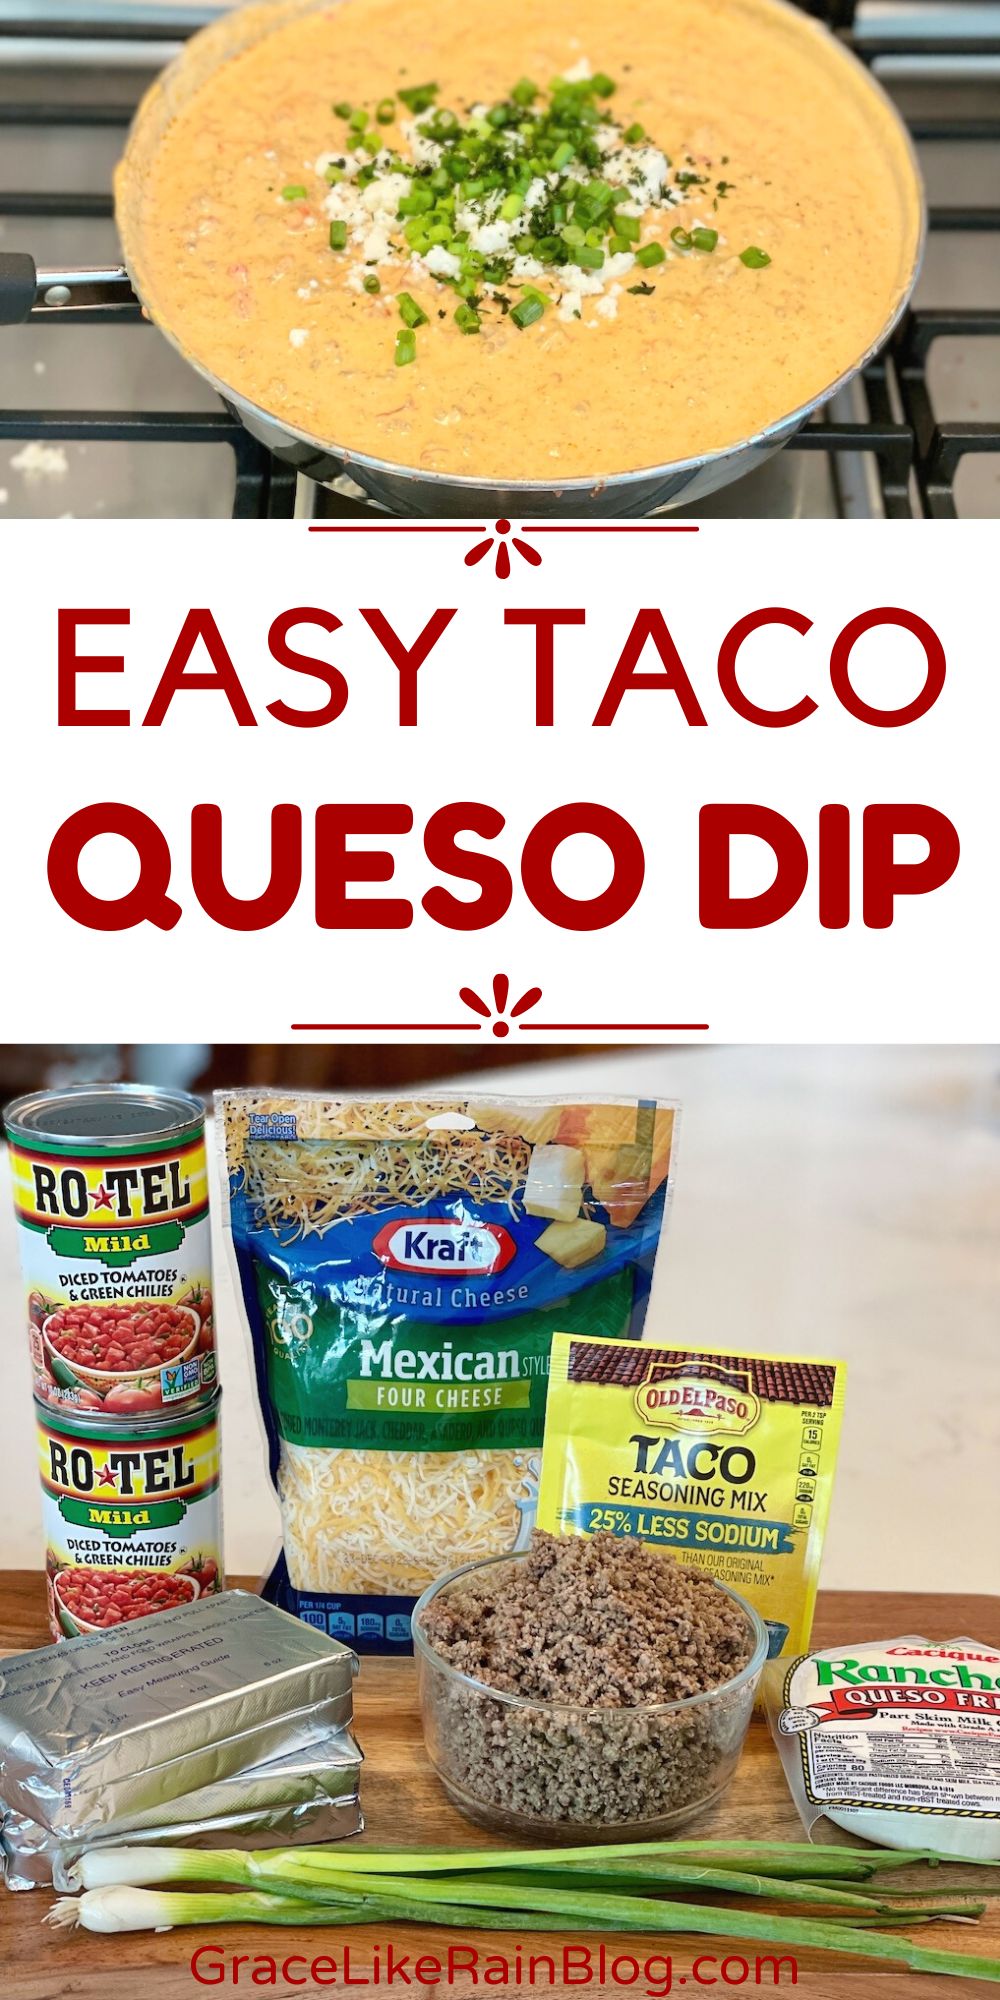 Easy Taco Queso Dip - Grace Like Rain Blog